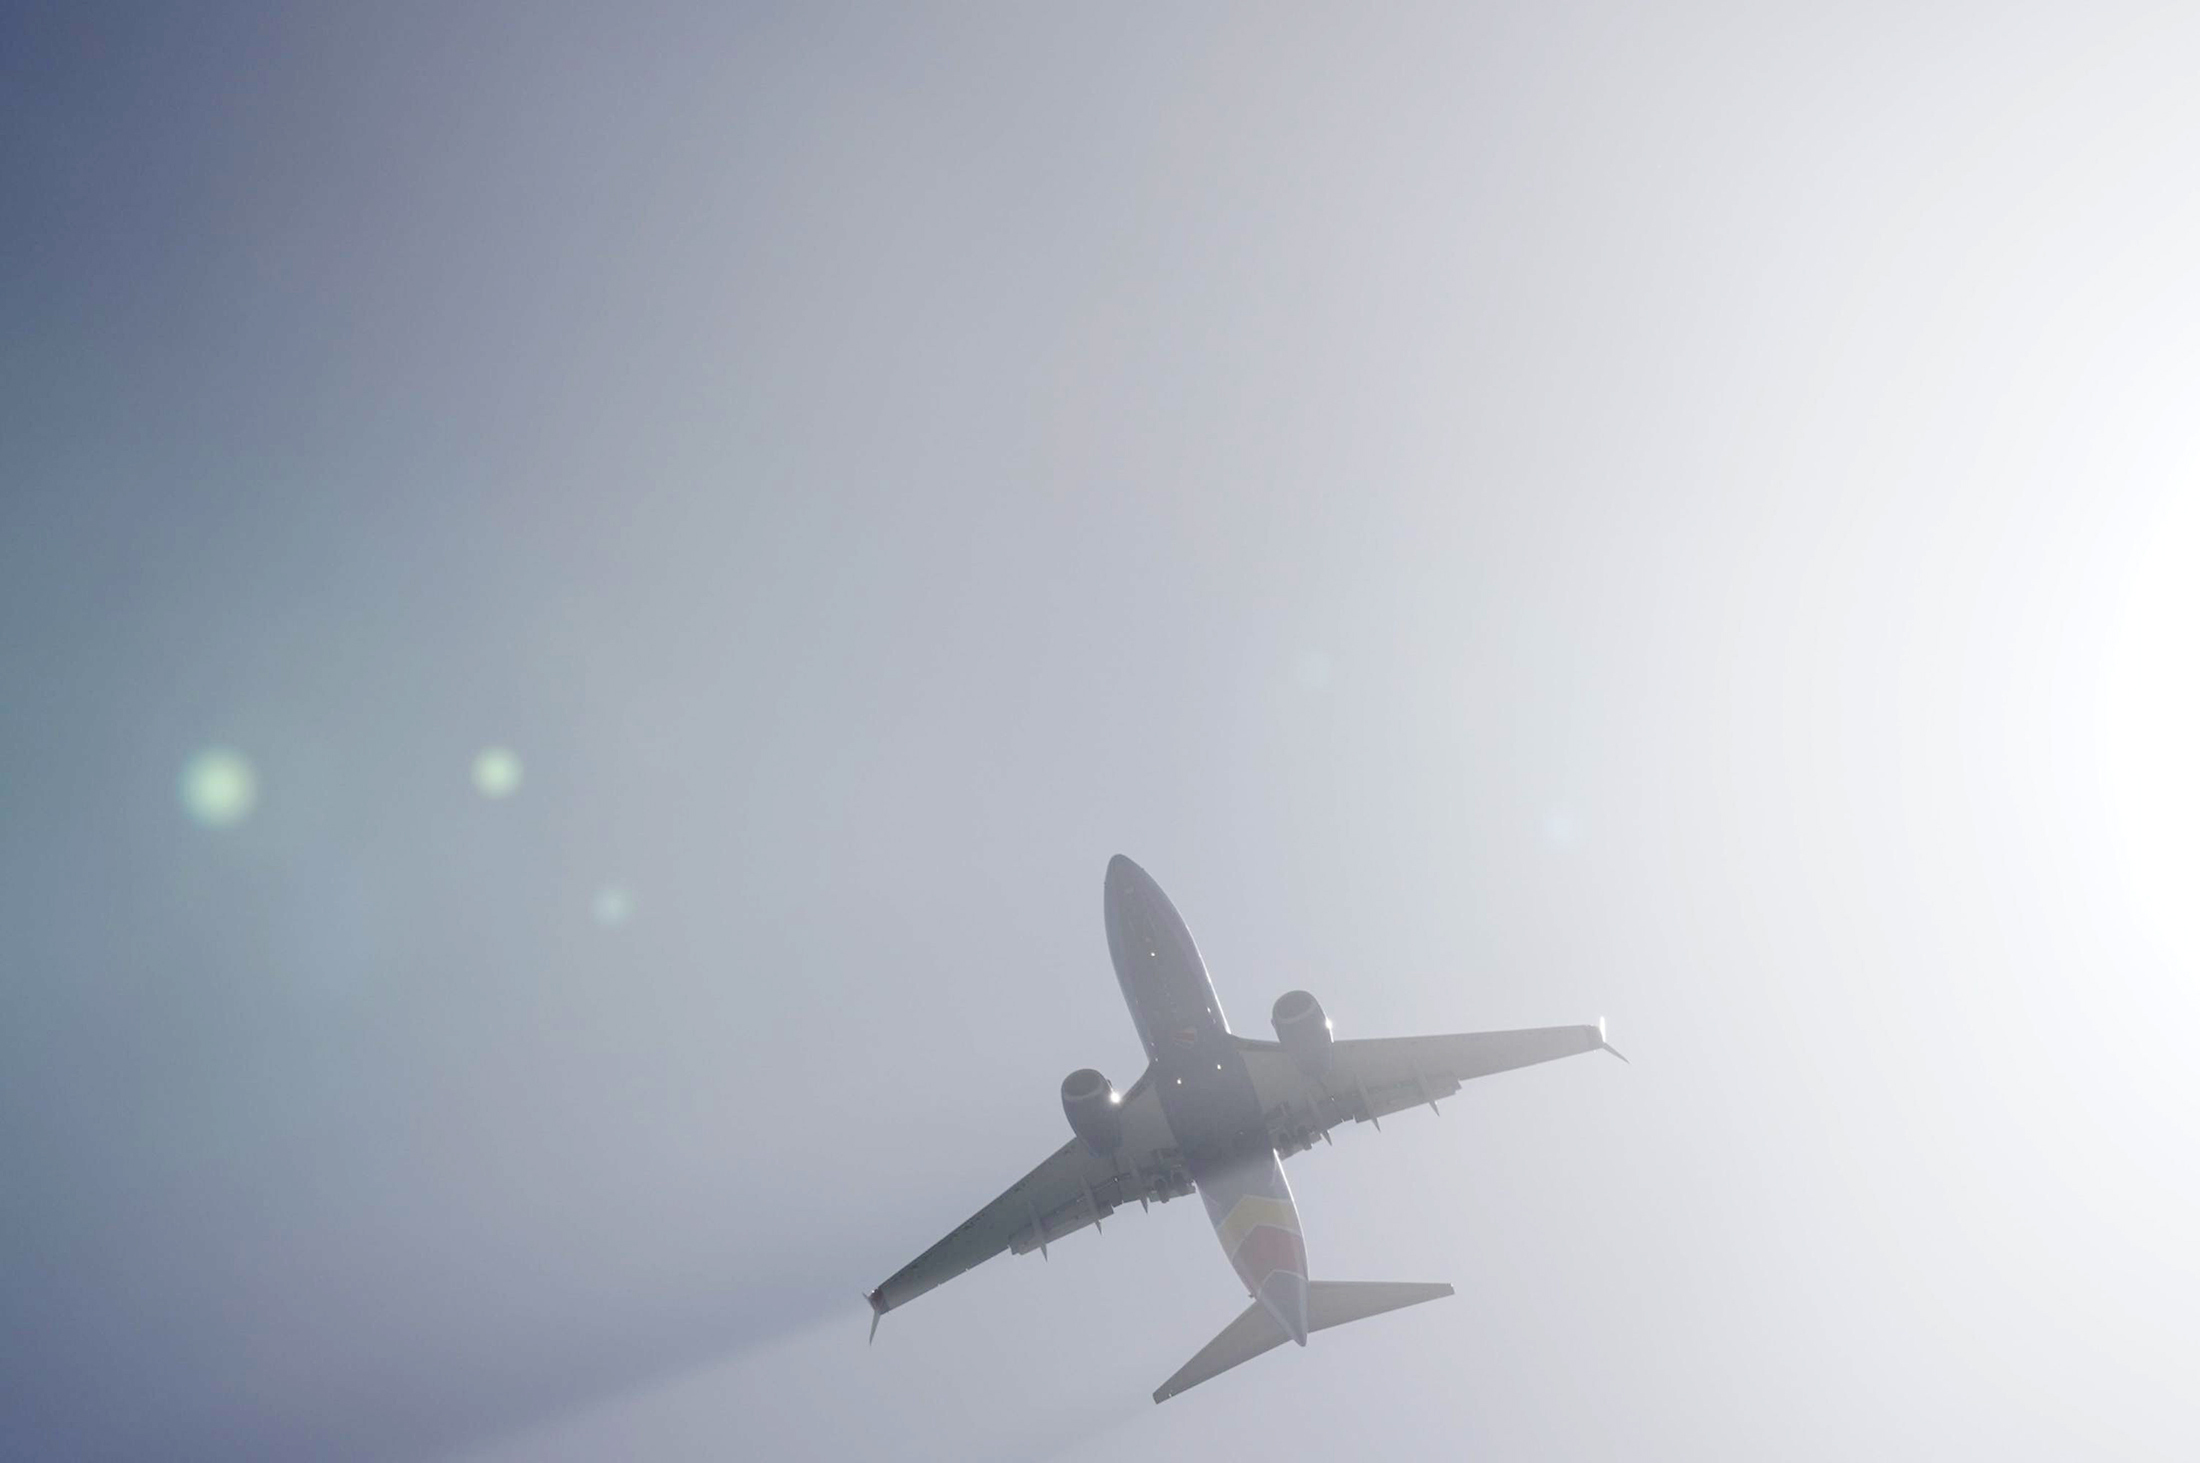 A passenger aircraft prepares to land at Los Angeles International Airport (LAX).